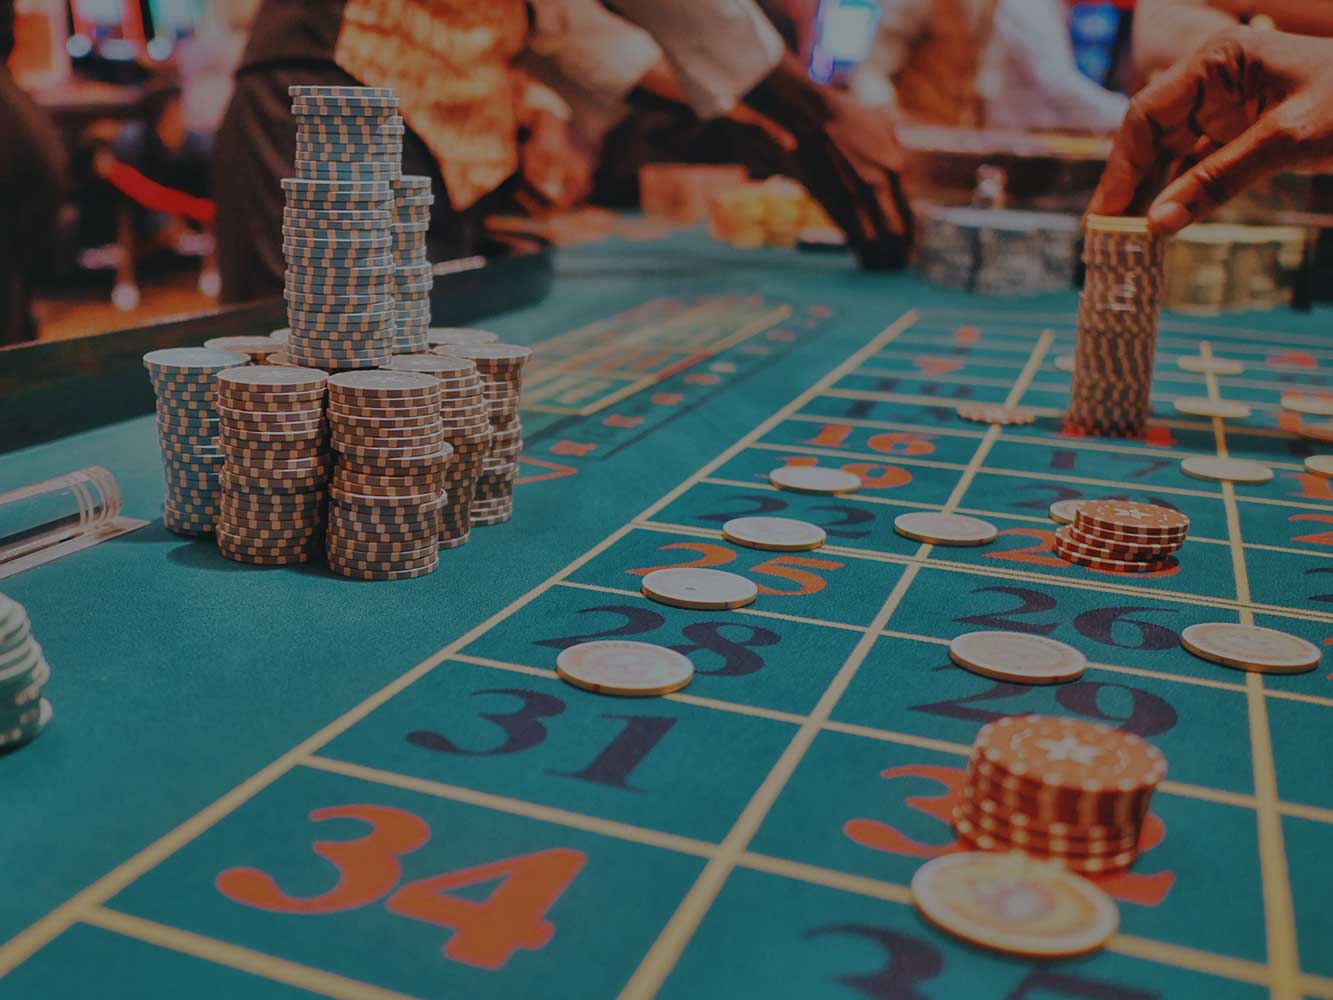 Gambling Gamble Casinos Gaming Slot Machines Sports Betting